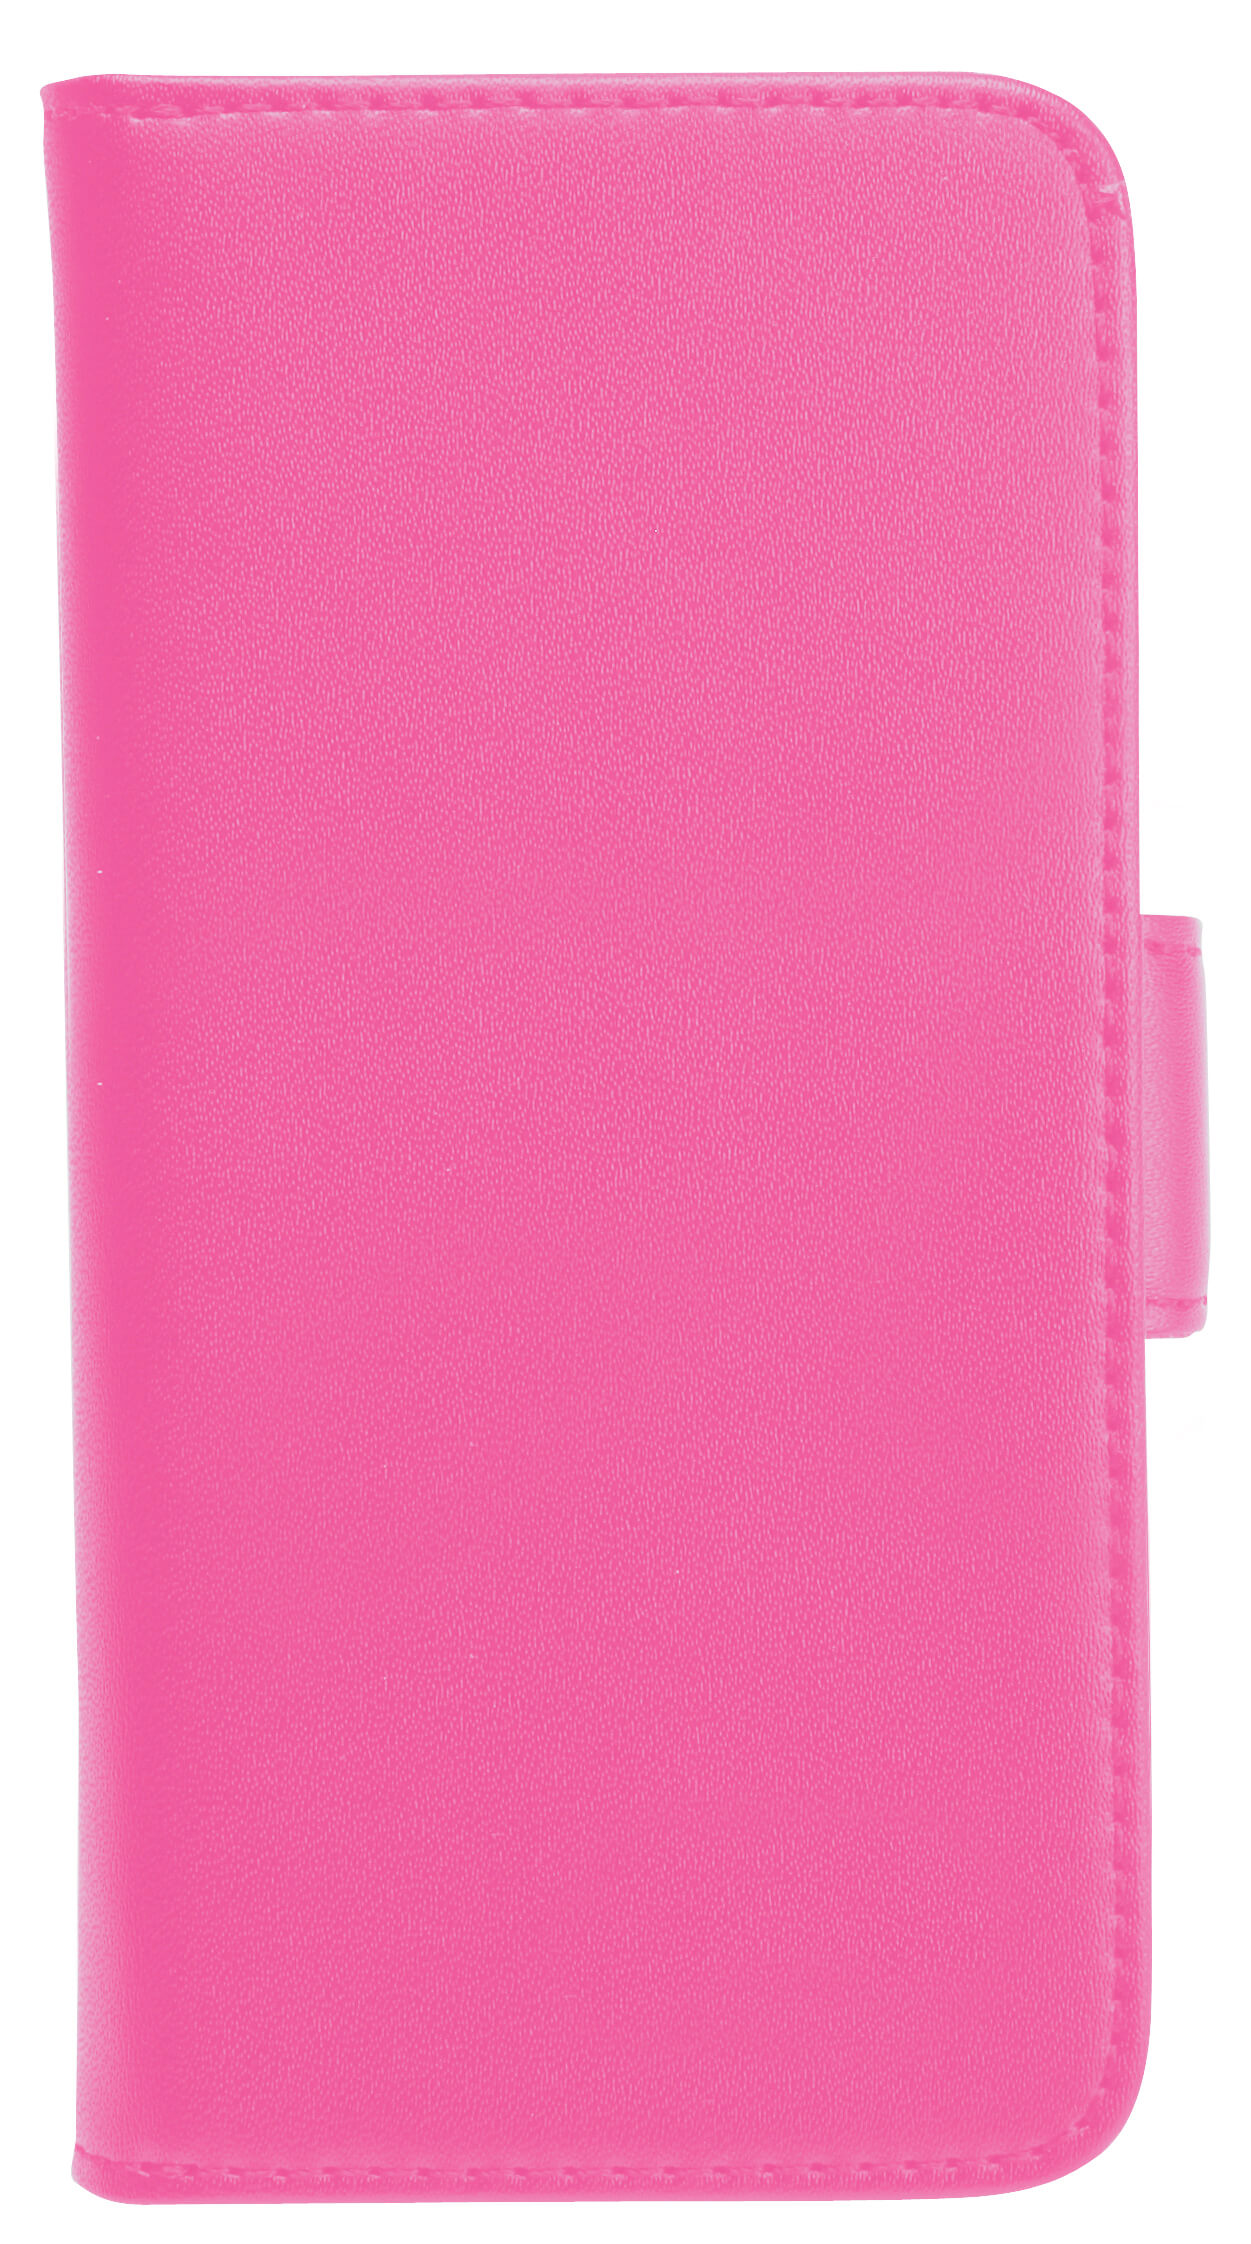 Wallet Case Pink - iPhone 5/5S/SE 